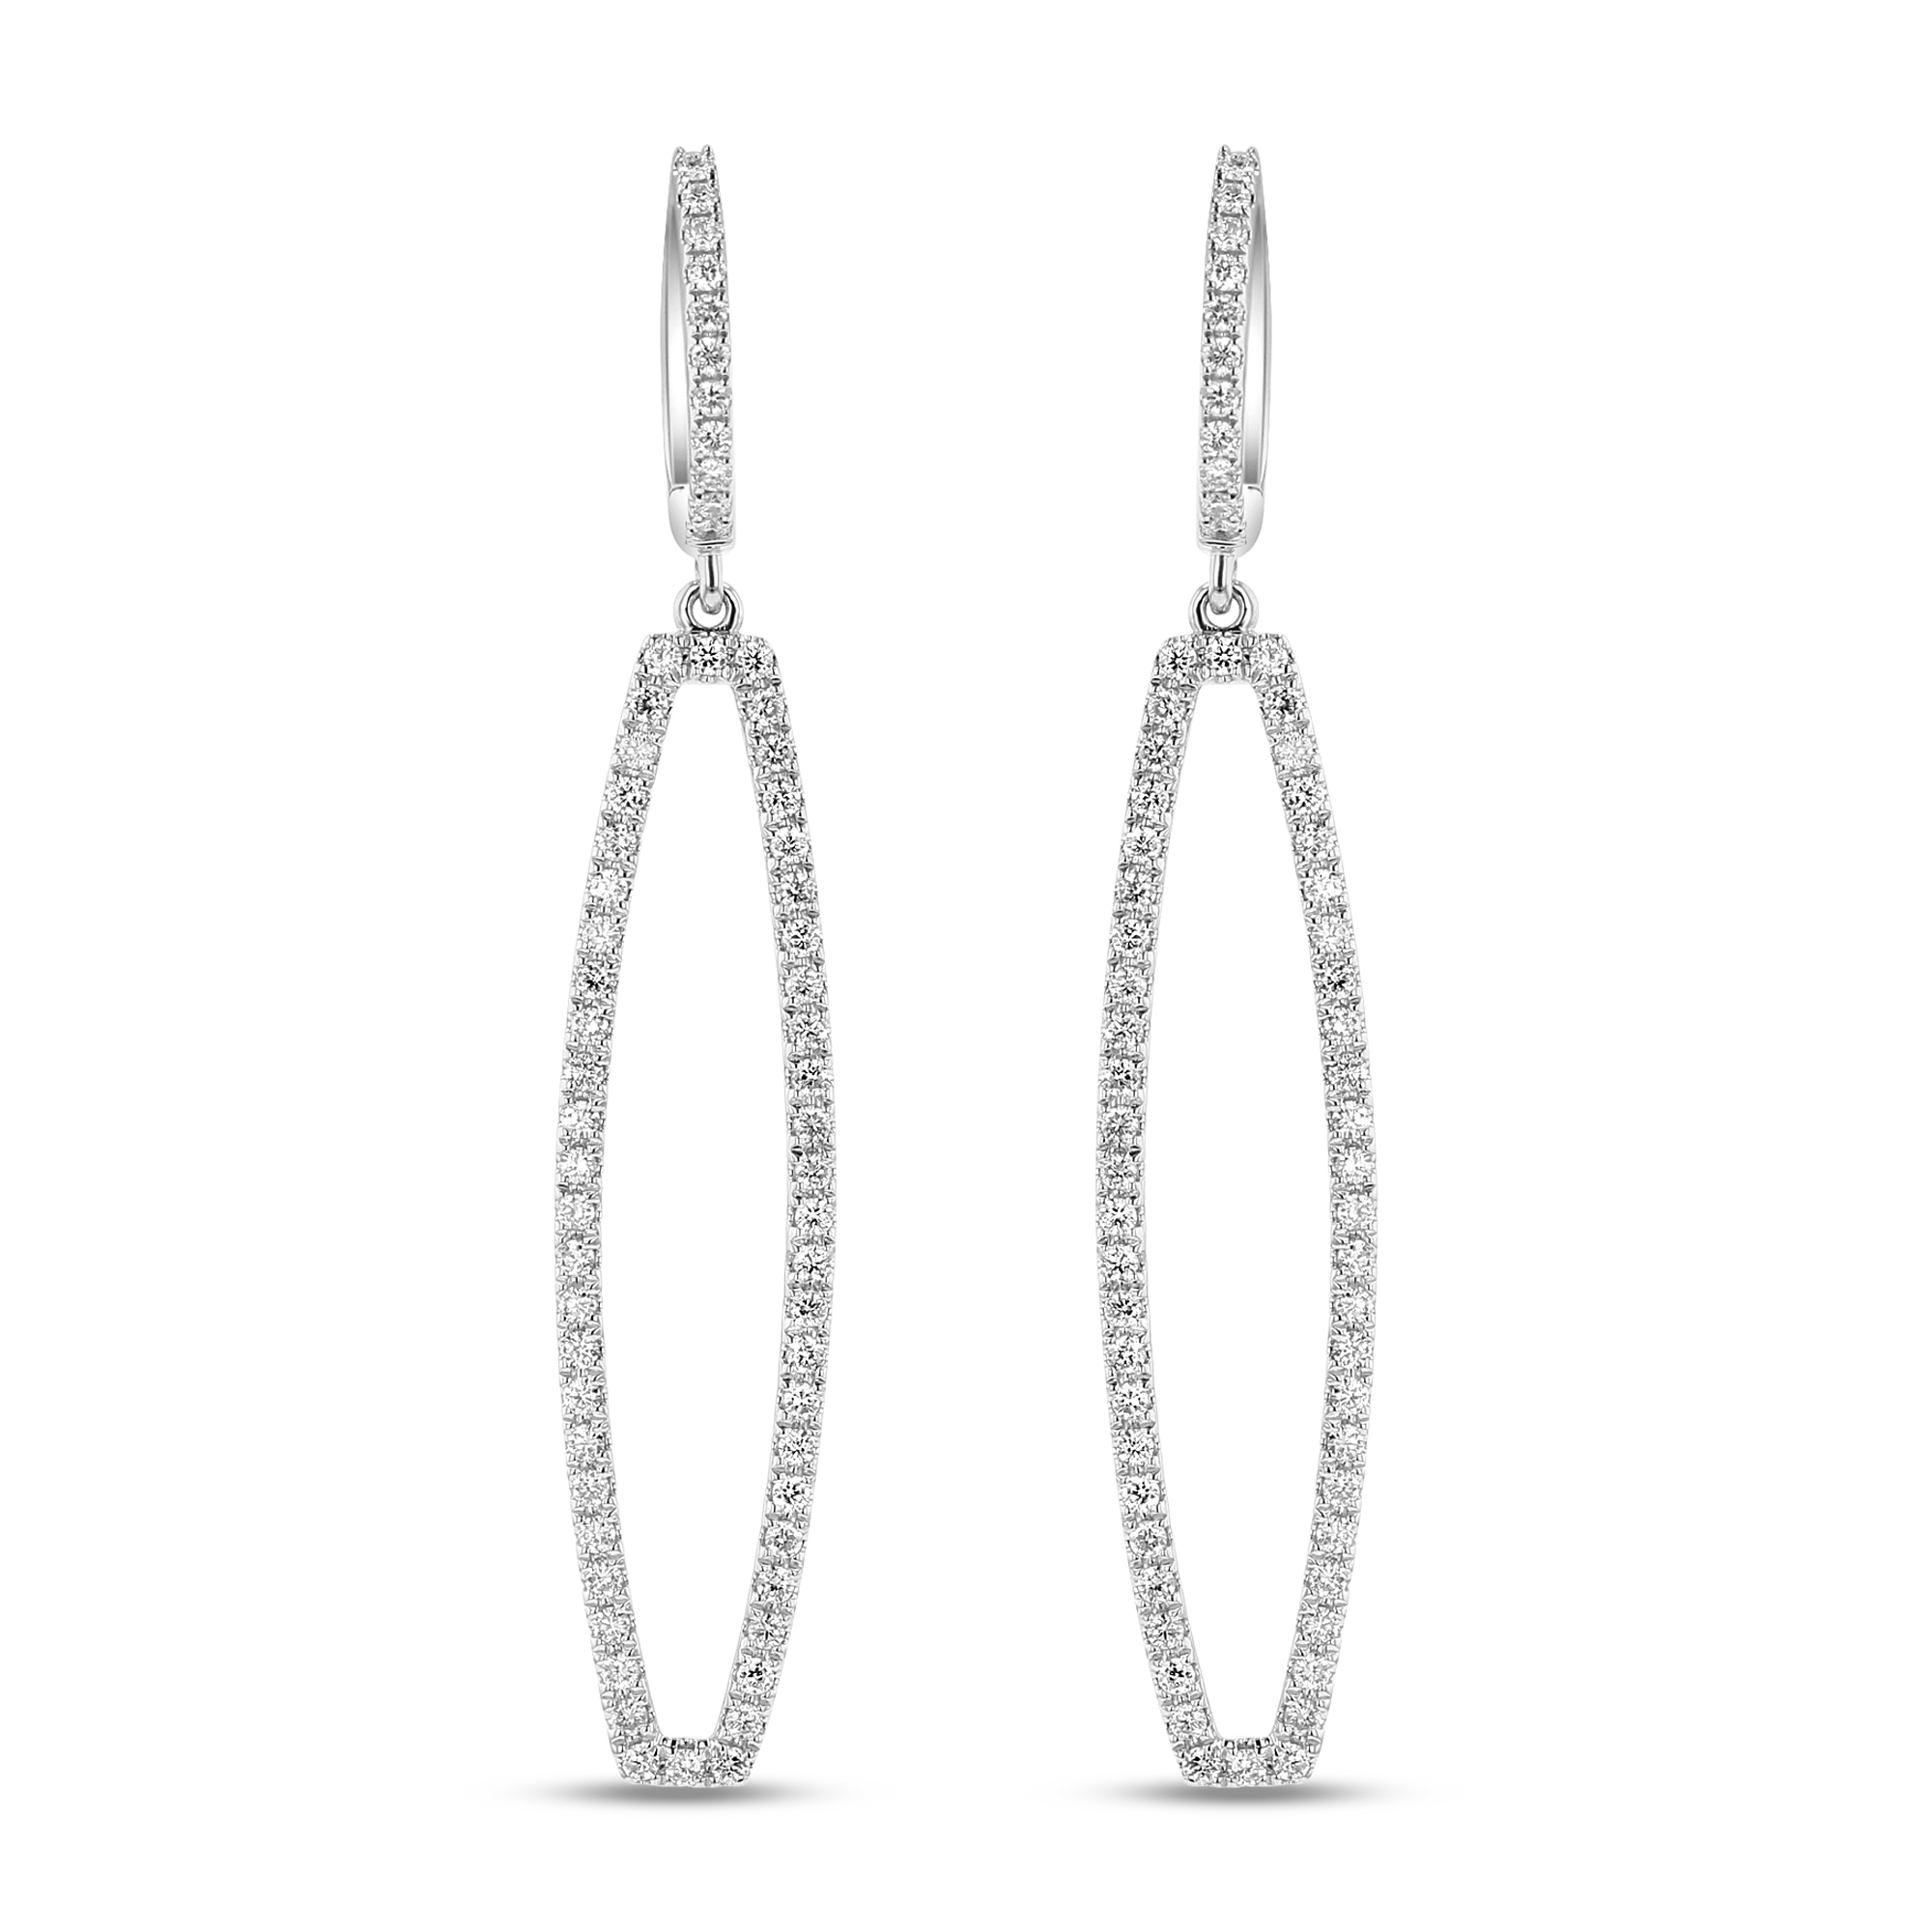 View 0.81ctw Diamond Fashion Earrings in 18k White Gold